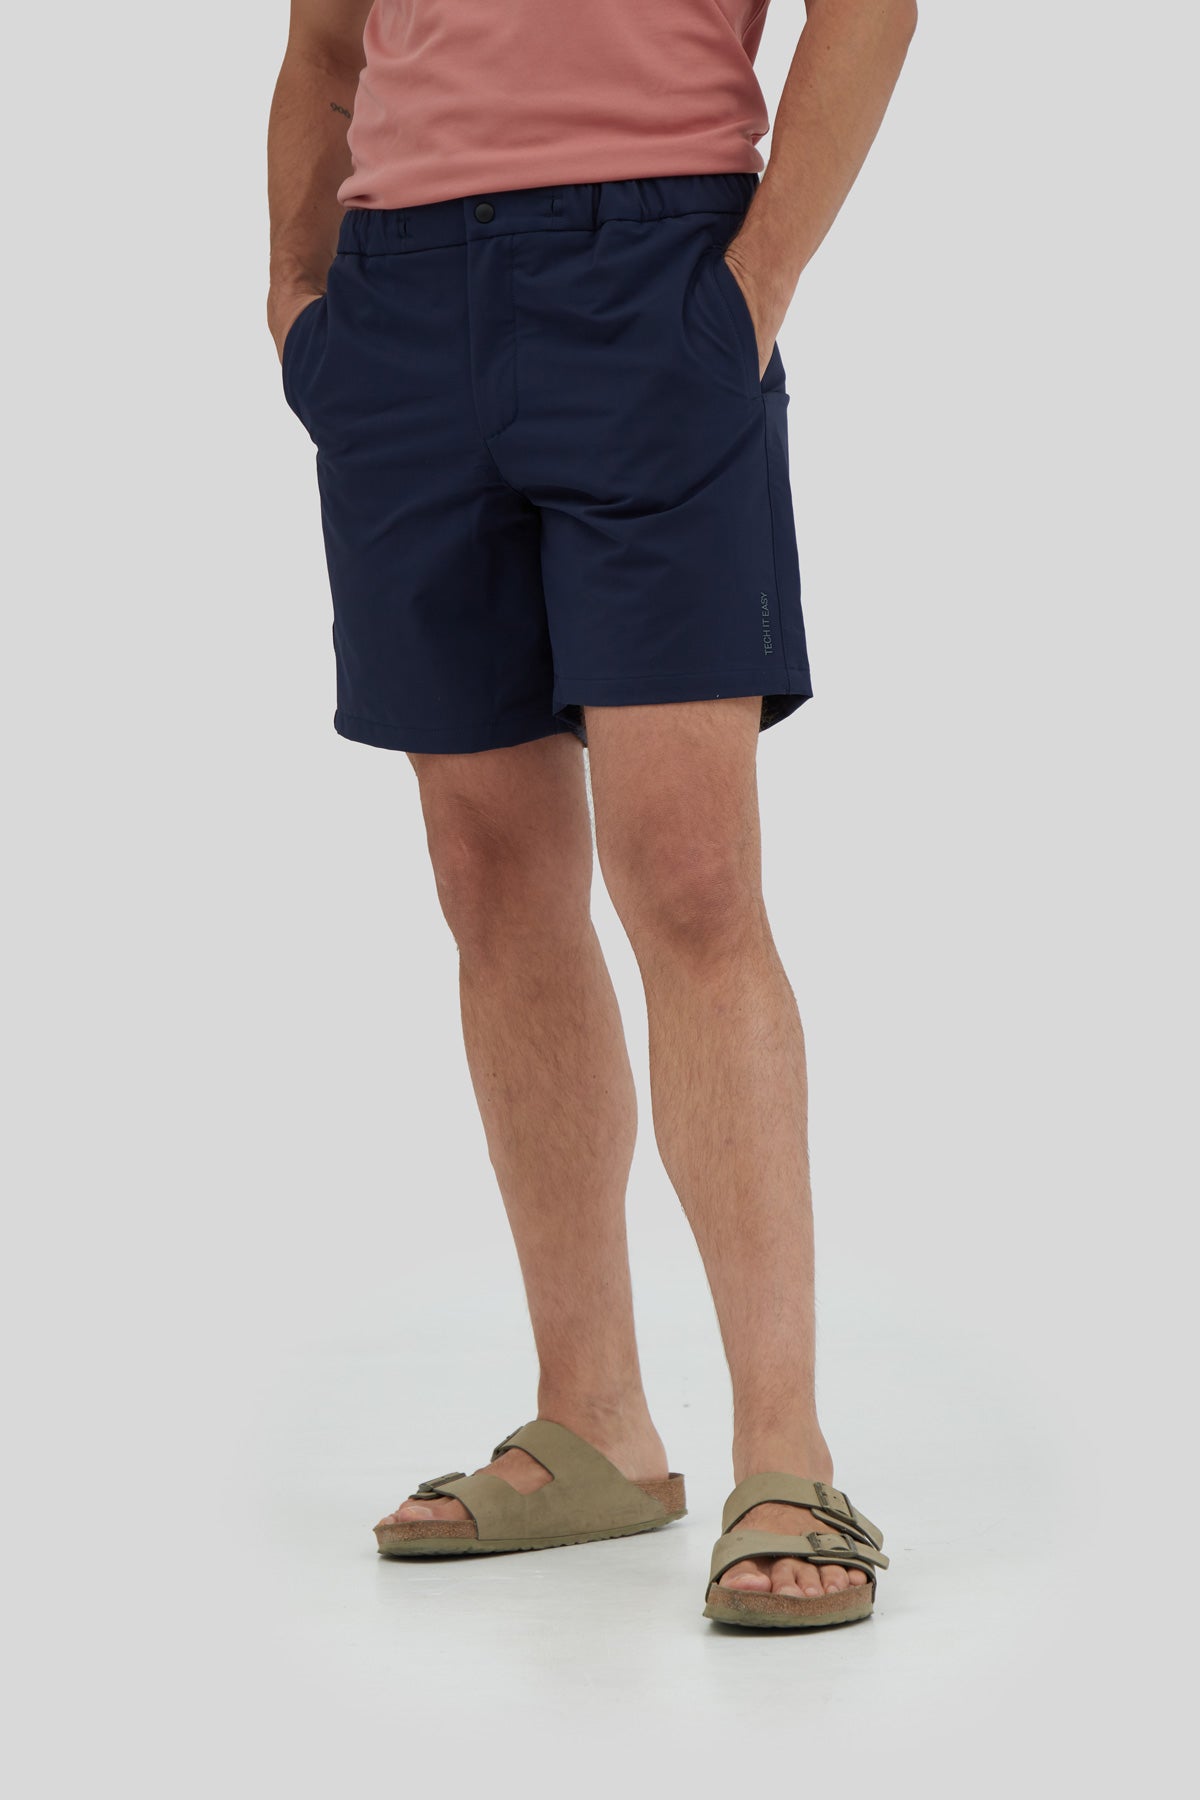 Navy shorts | Enrique Alex